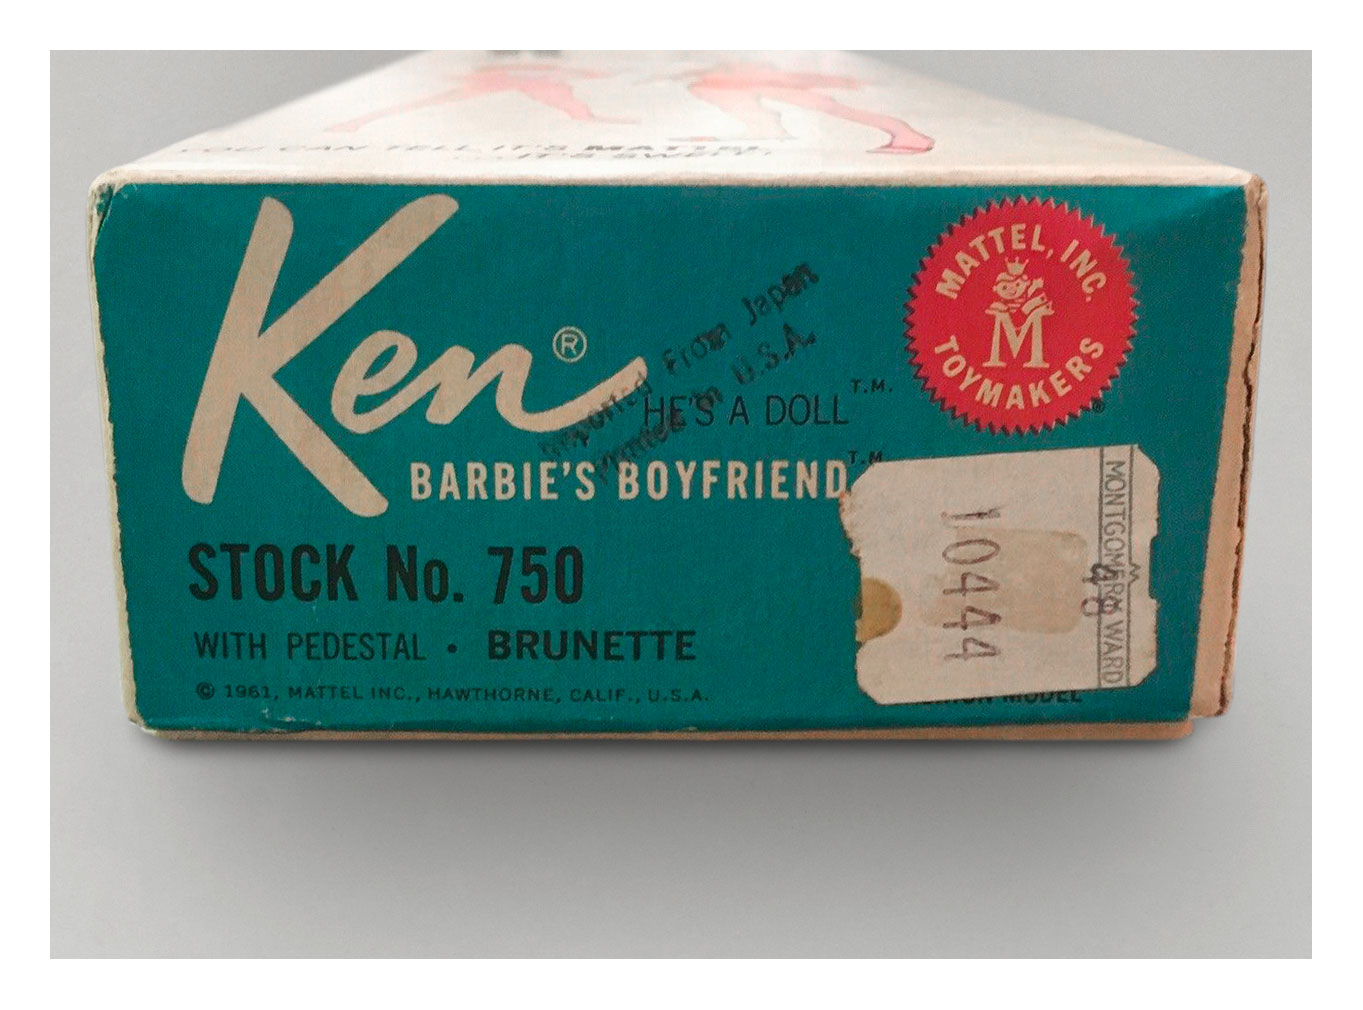 1966-67 #1020 Bendable Leg Ken box as sold by Montgomery Ward